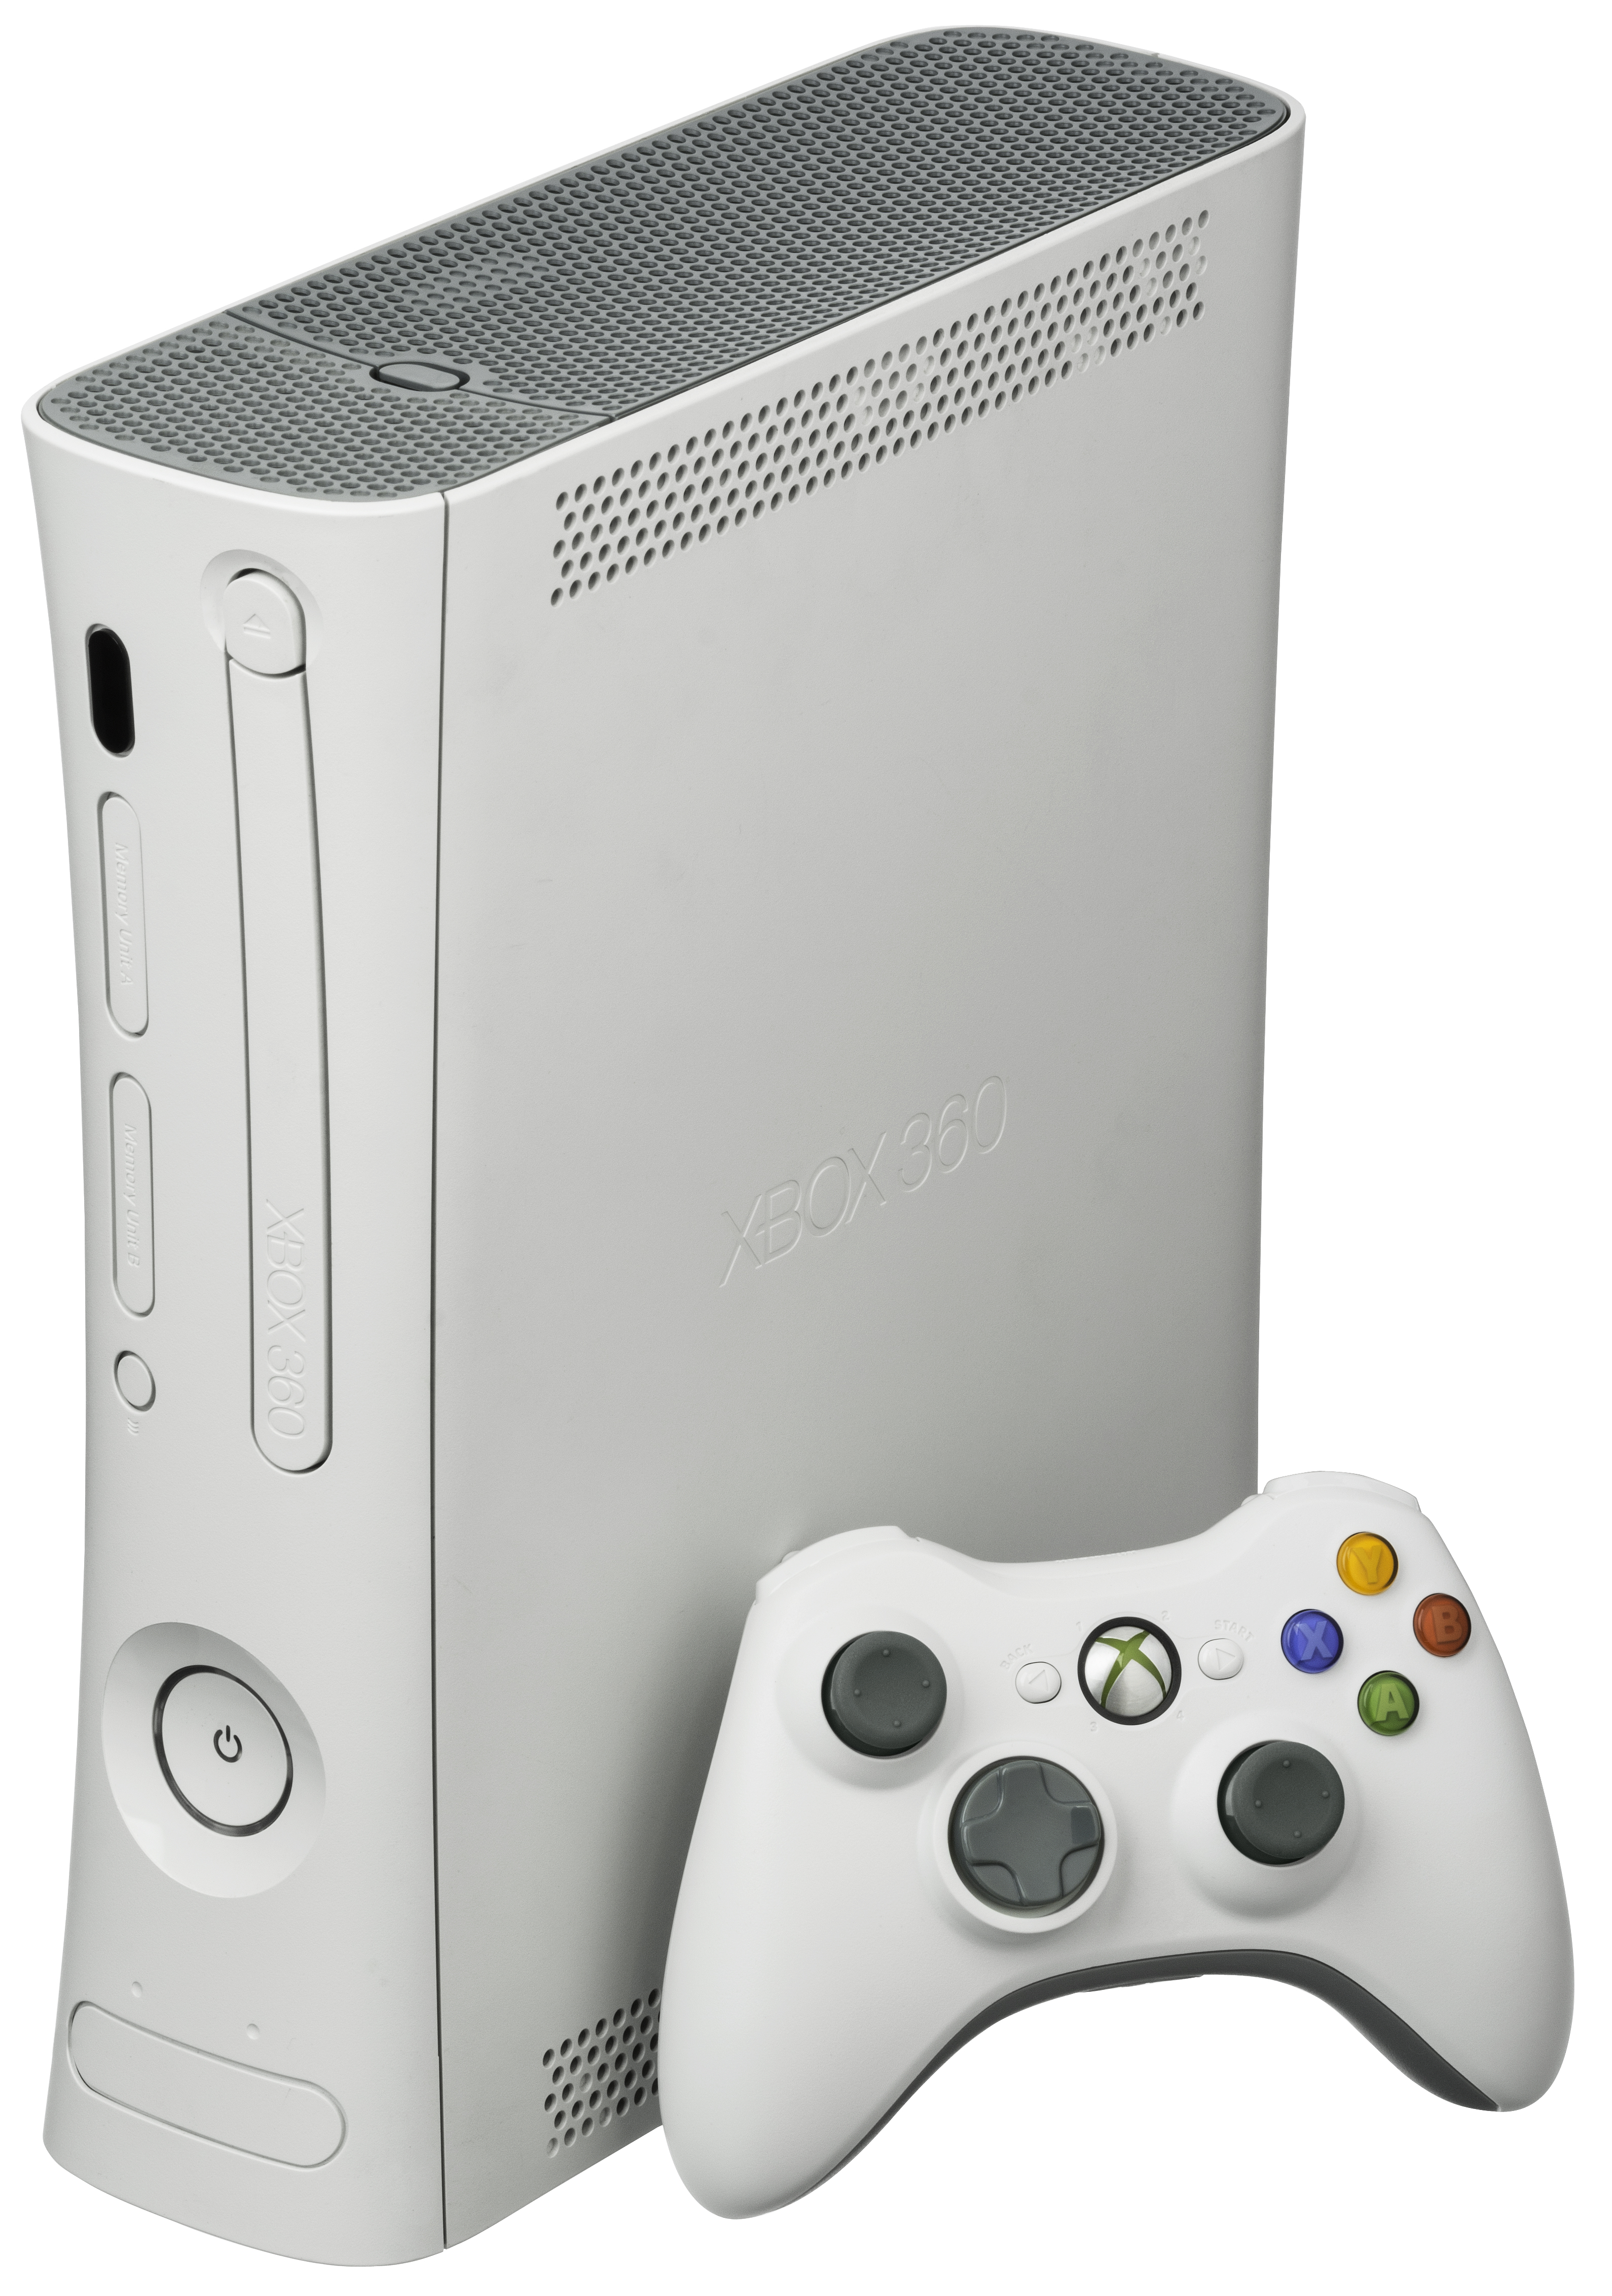 Xbox 360 Wikipedia